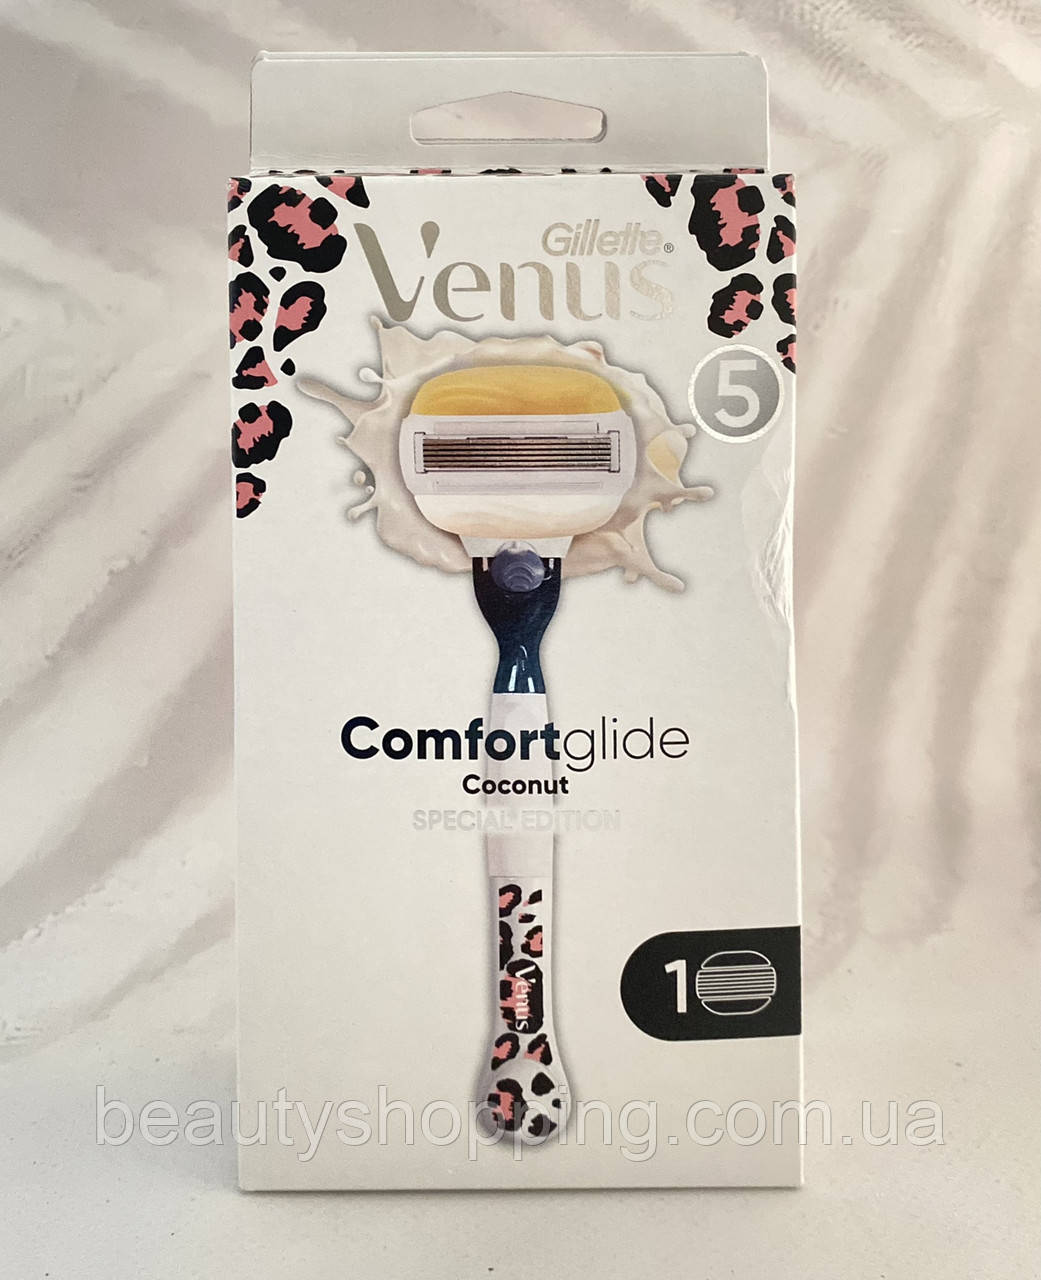 Gillette Venus Comfortglide Coconut бритва для гоління + 1 касета Special Edition (леопардовий дизайн)